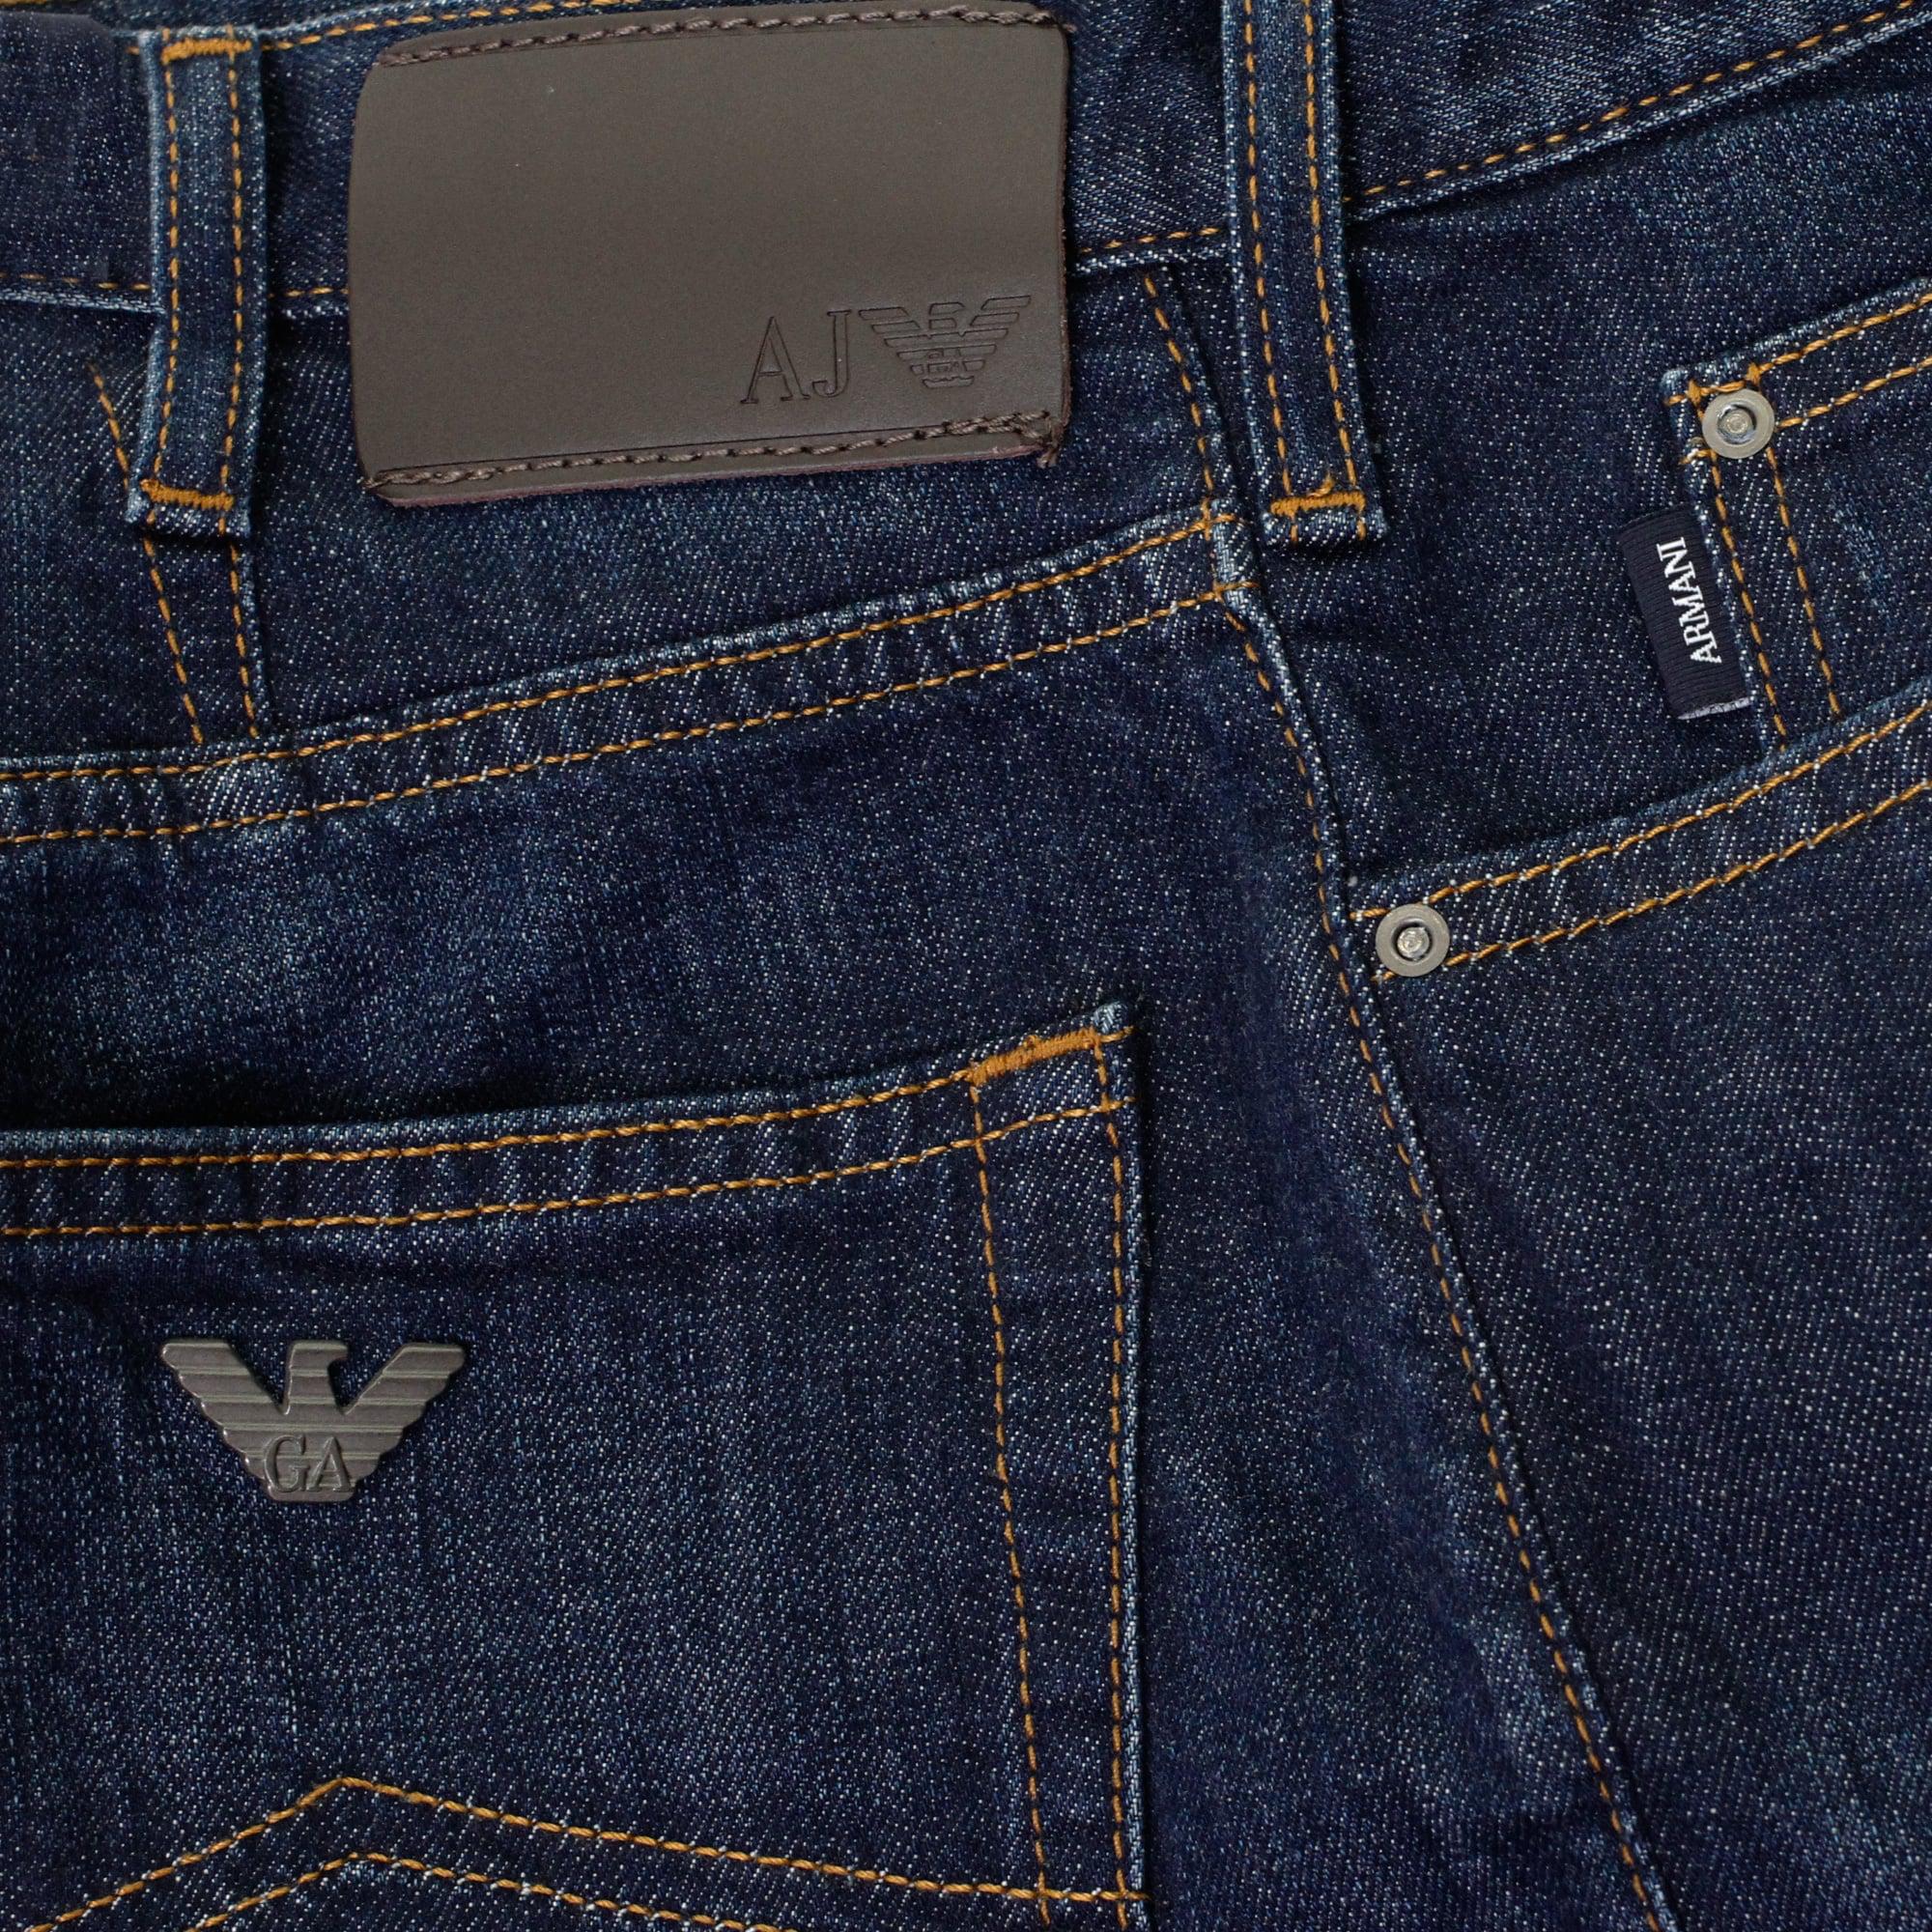 Lyst - Armani Jeans J21 Blue Denim 8n6j21 6d0lz in Blue for Men